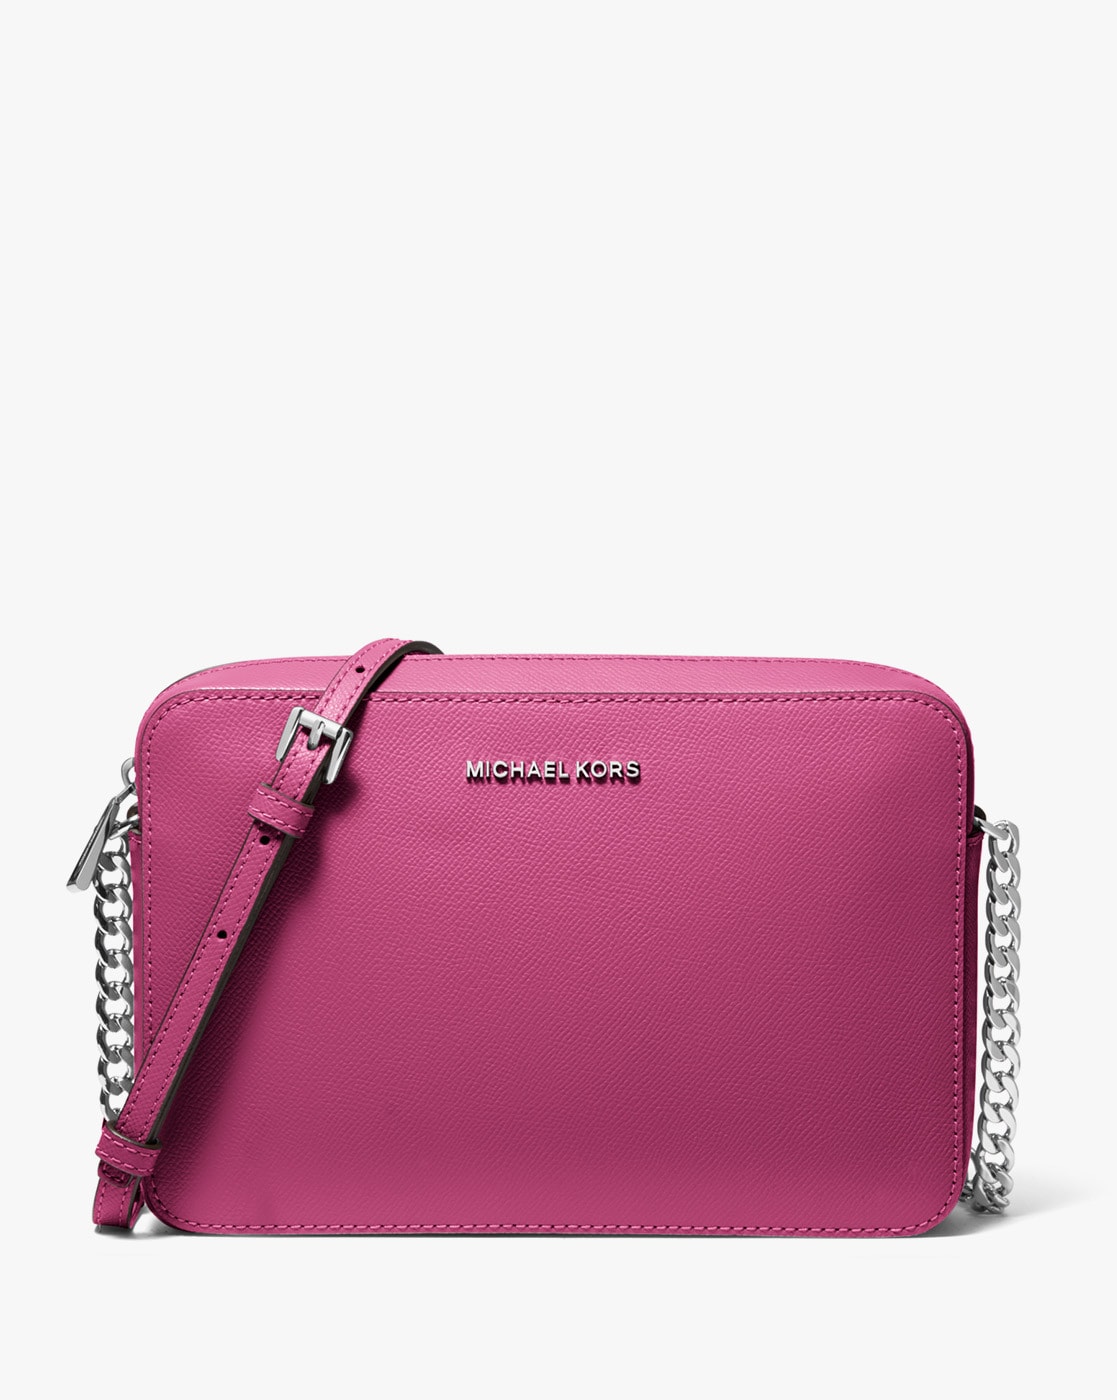 Michael Kors Jet Set Snap Satchel/Top Handle Bag Handbags & Bags for Women  for sale | eBay